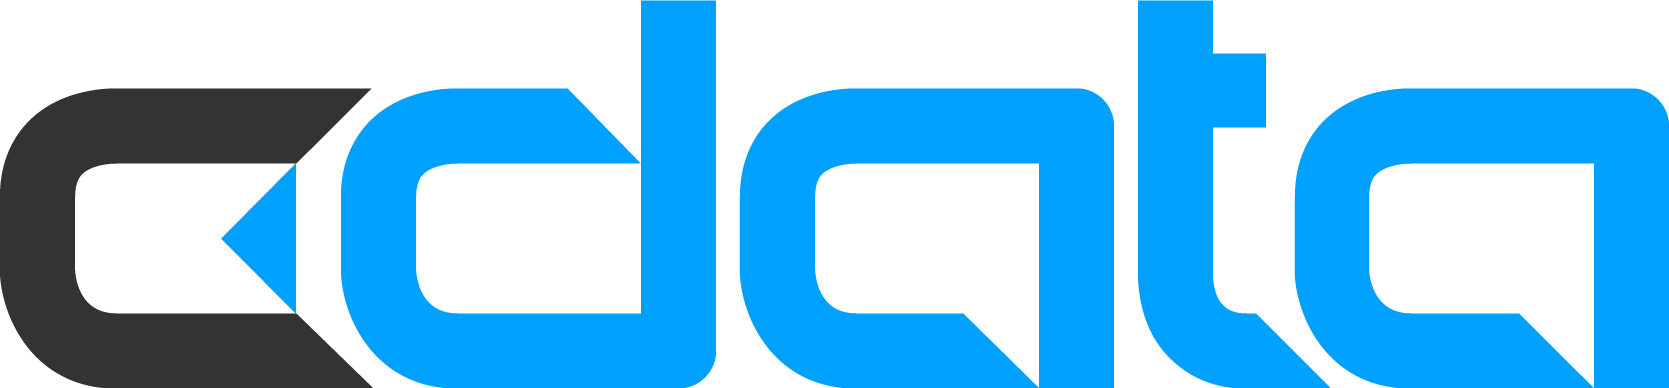 Jdbc Driver For Sharepoint - Cdata Logo (1669x388)